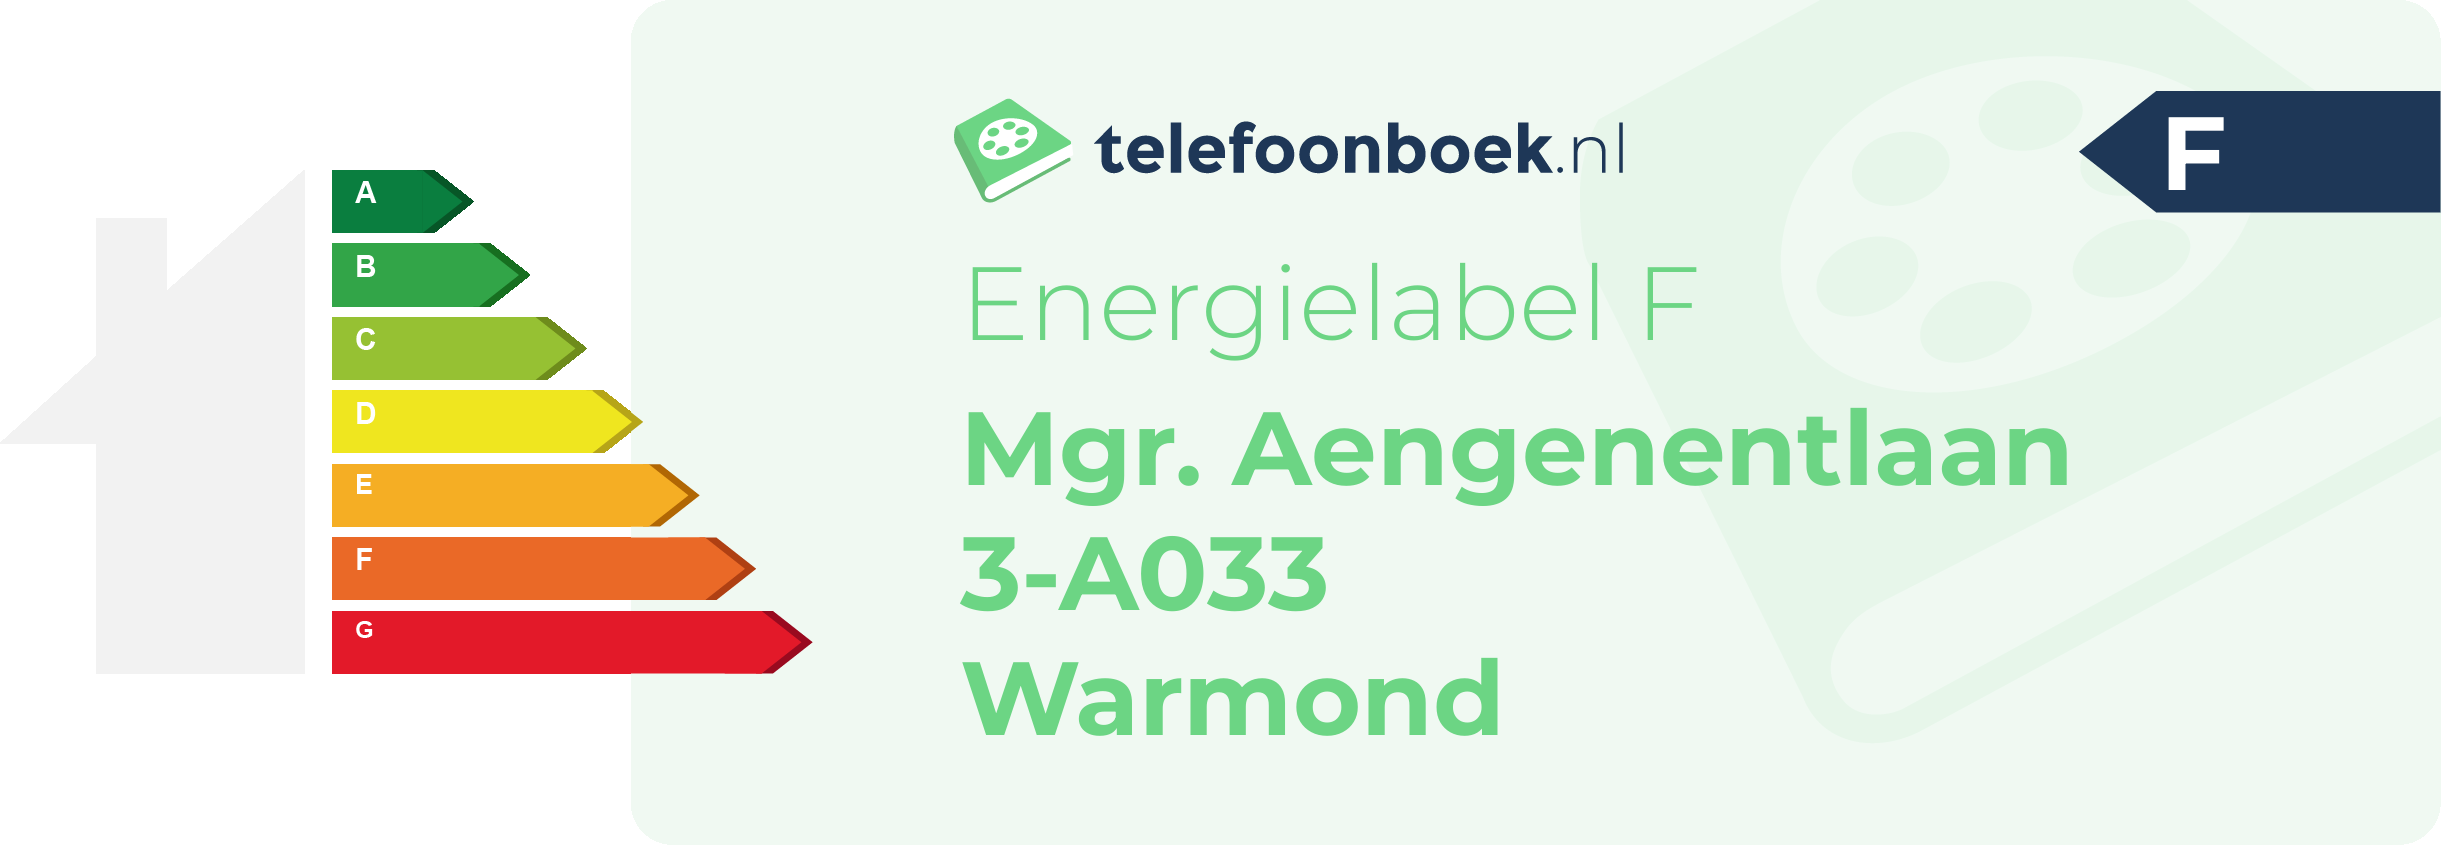 Energielabel Mgr. Aengenentlaan 3-A033 Warmond